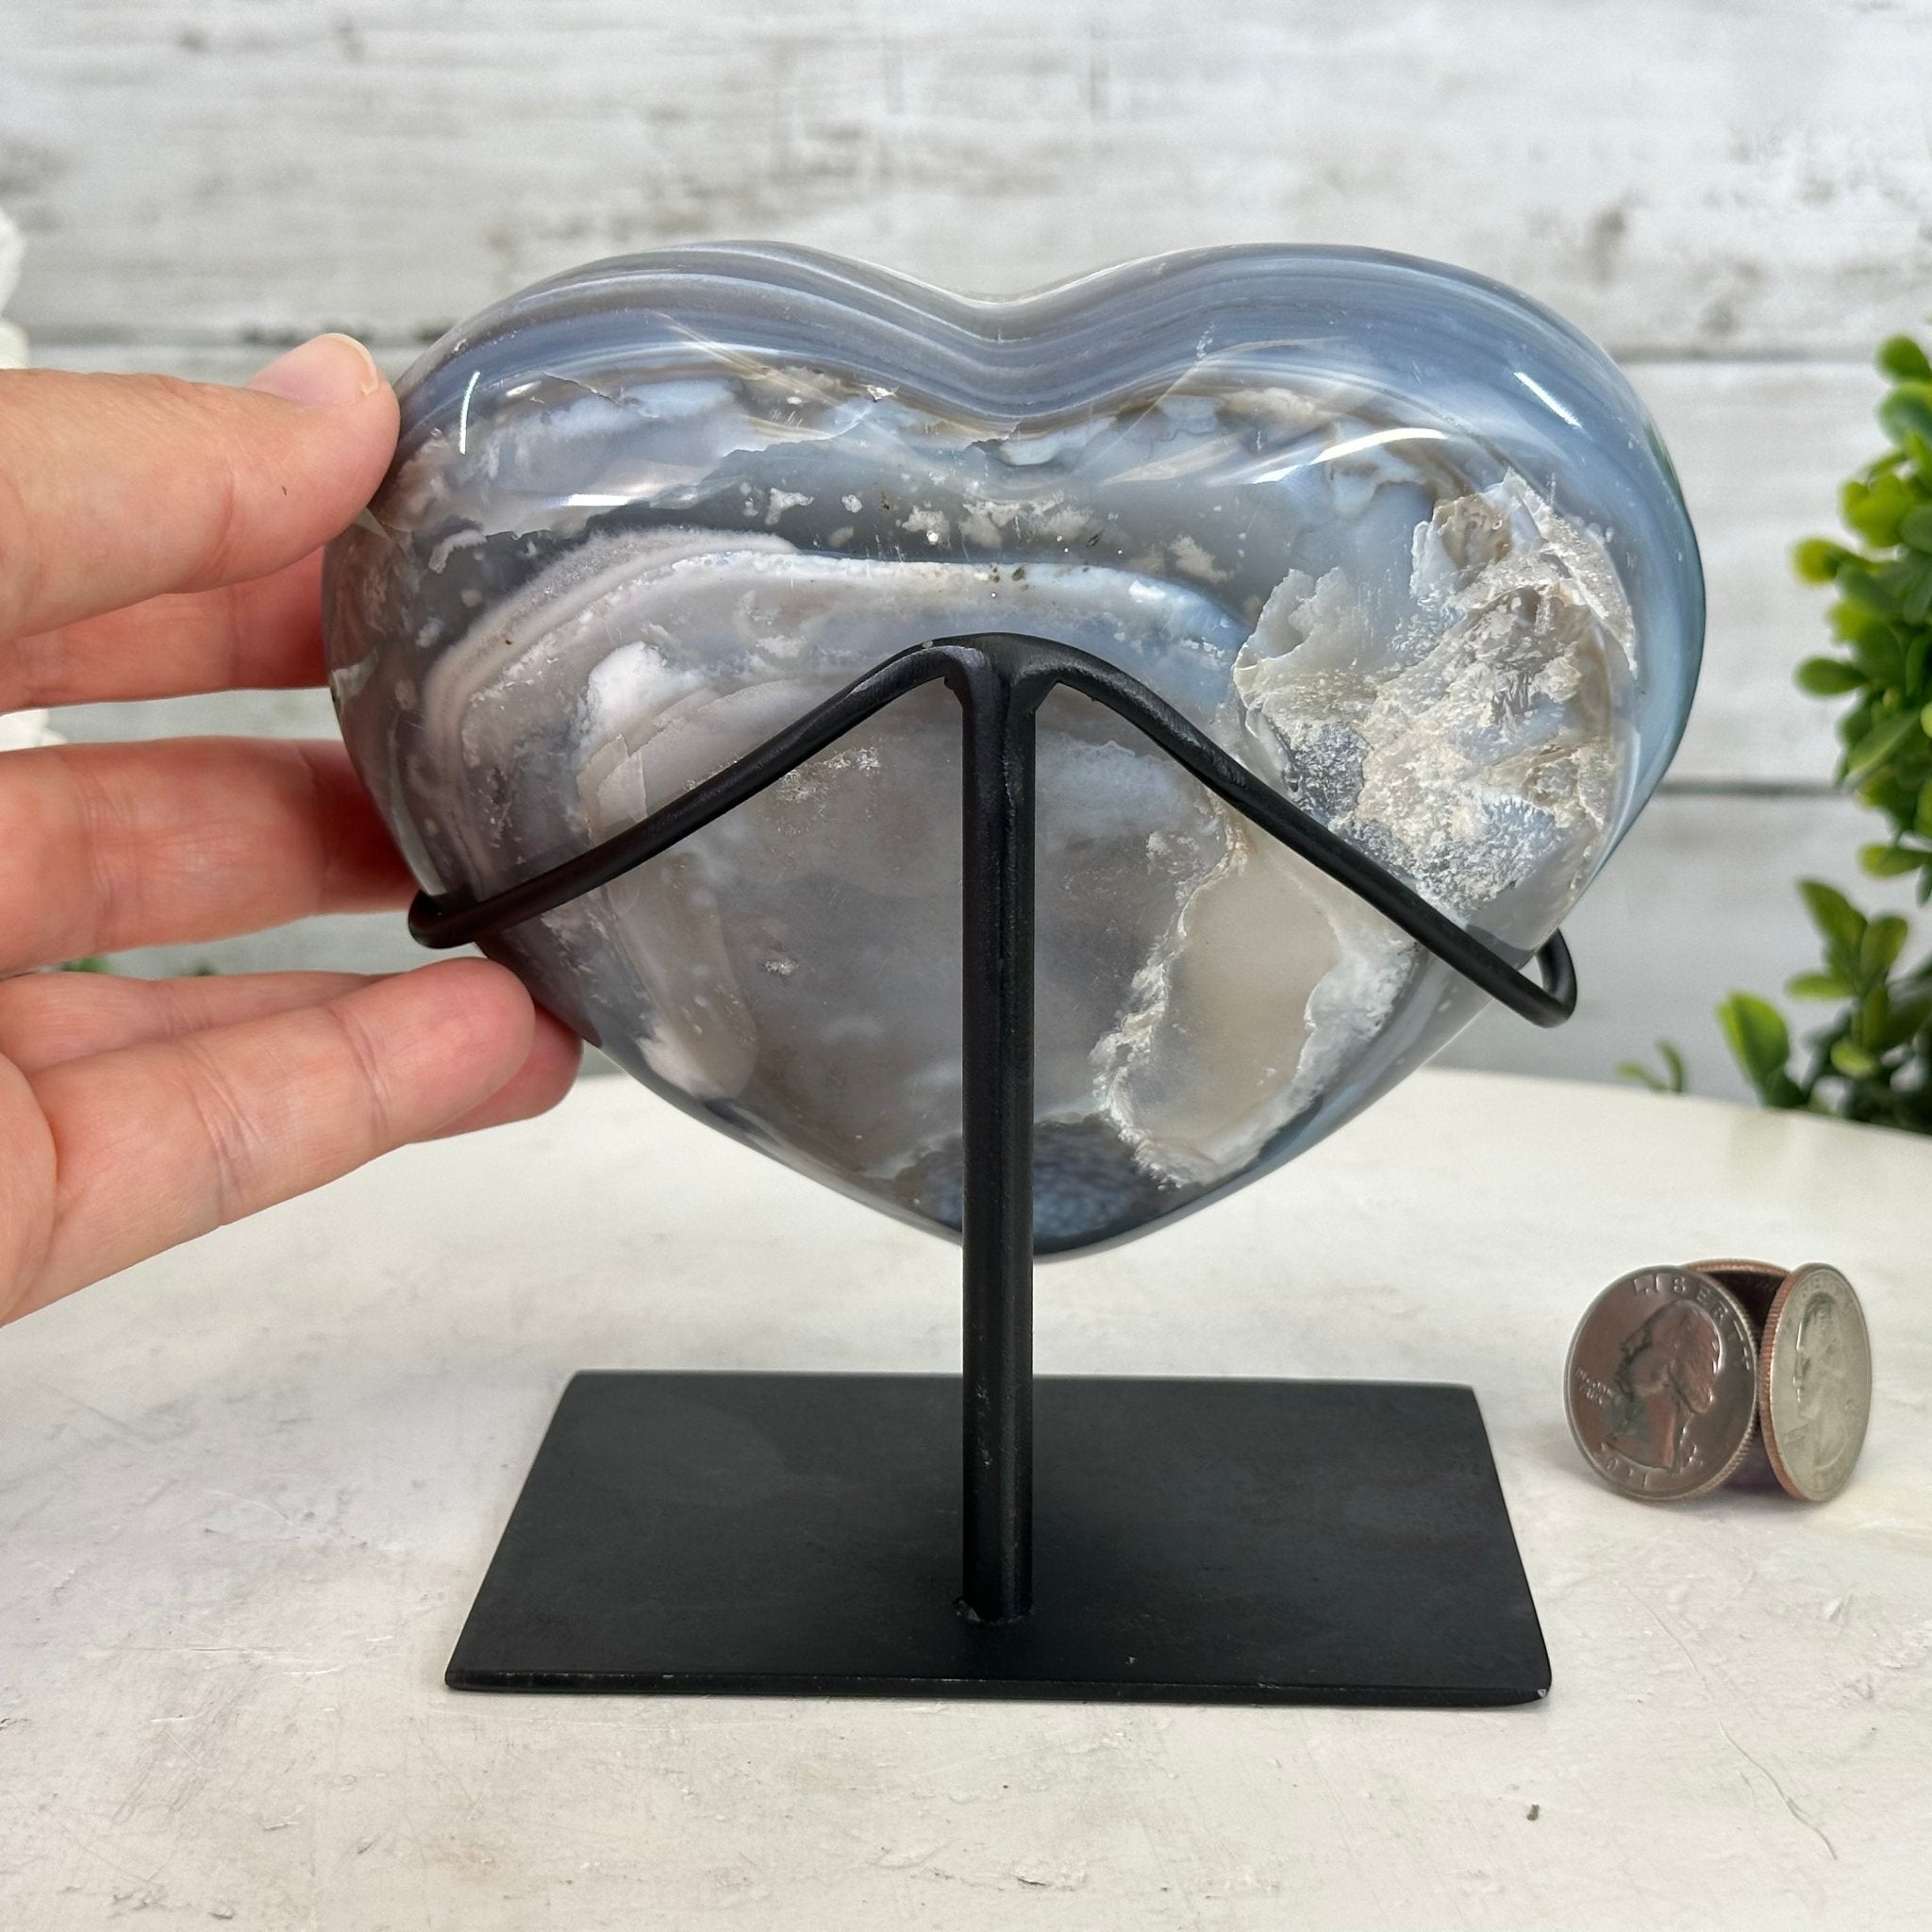 Polished Agate Heart Geode on a Metal Stand, 3 lbs & 5.3" Tall, Model #5468-0046 by Brazil Gems - Brazil GemsBrazil GemsPolished Agate Heart Geode on a Metal Stand, 3 lbs & 5.3" Tall, Model #5468-0046 by Brazil GemsHearts5468-0046